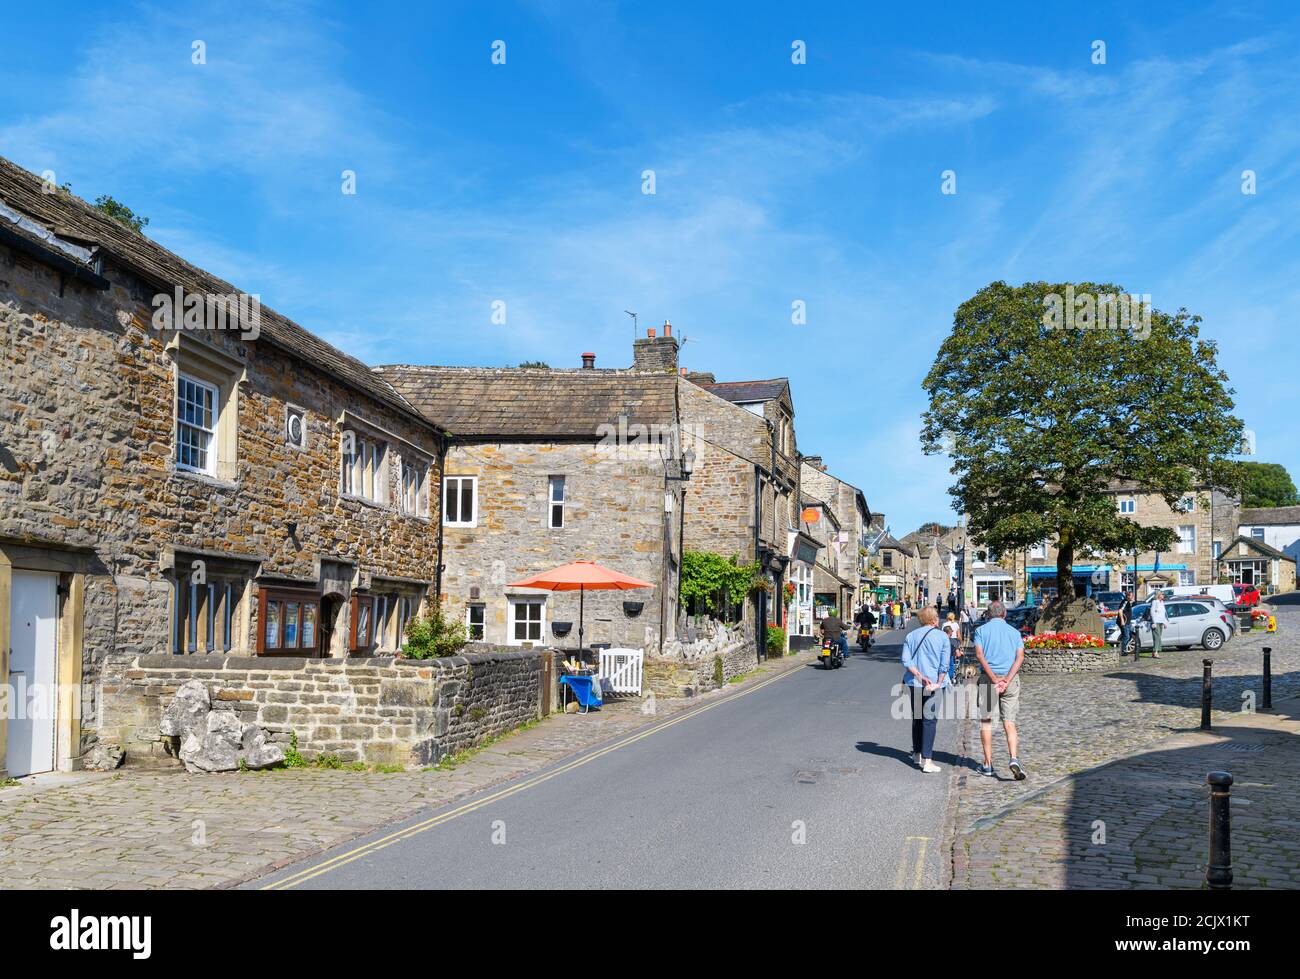 The Square and main Street dans le village anglais traditionnel de Grassington, Wharfedale, Yorkshire Dales National Park, North Yorkshire, Angleterre, Royaume-Uni Banque D'Images